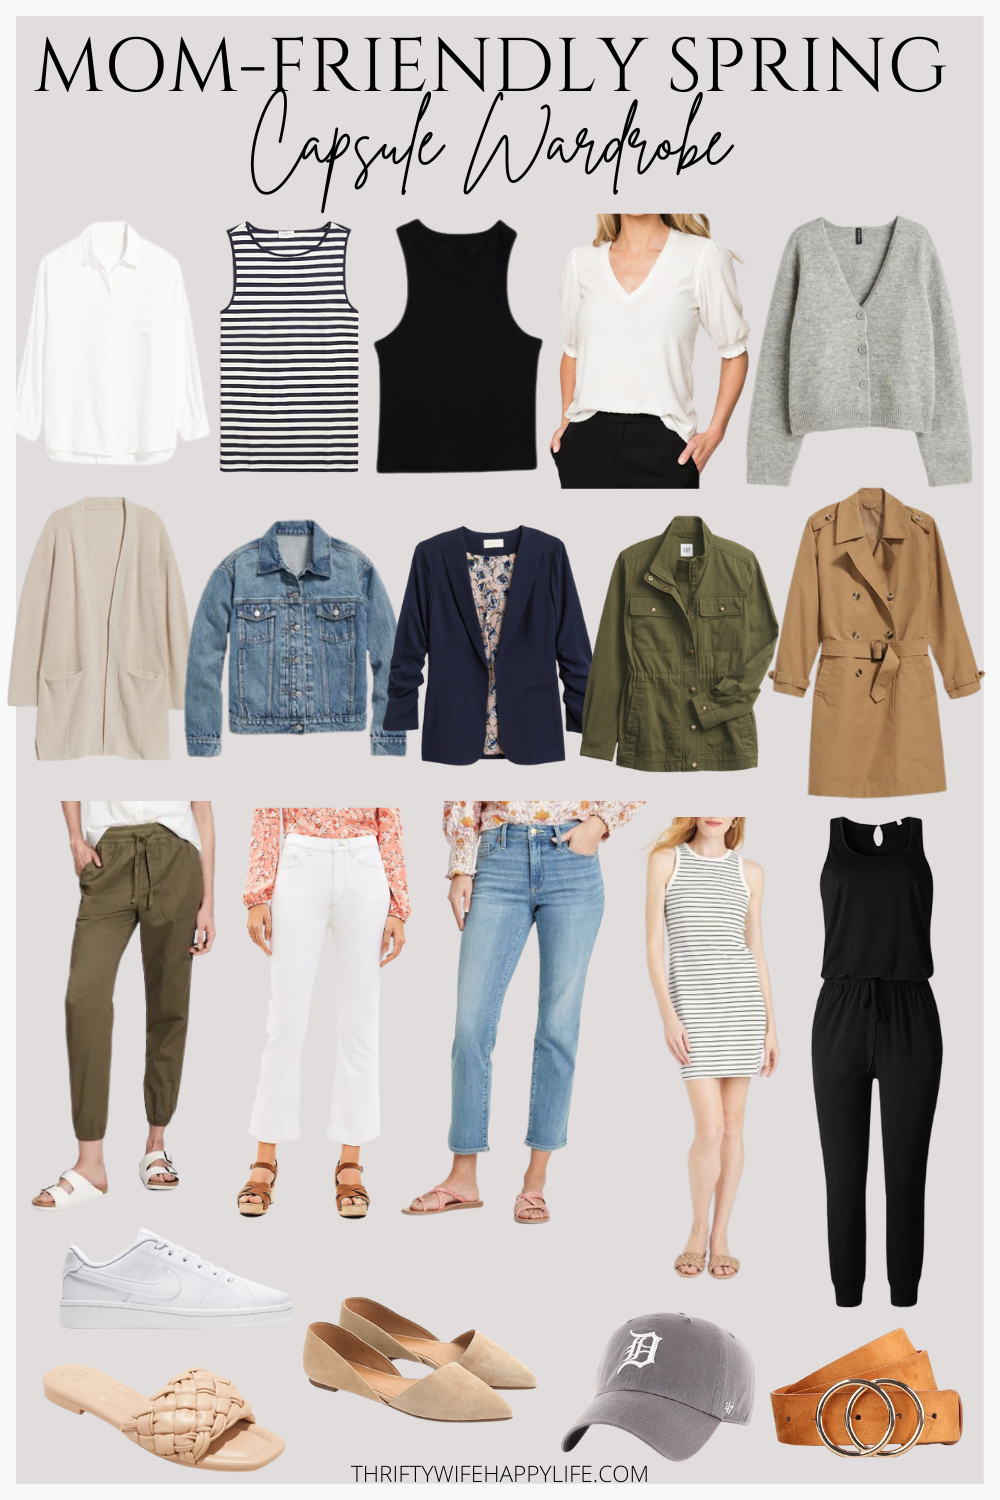 The Capsule Wardrobe Checklist: Top 5 Wardrobe Staple Items